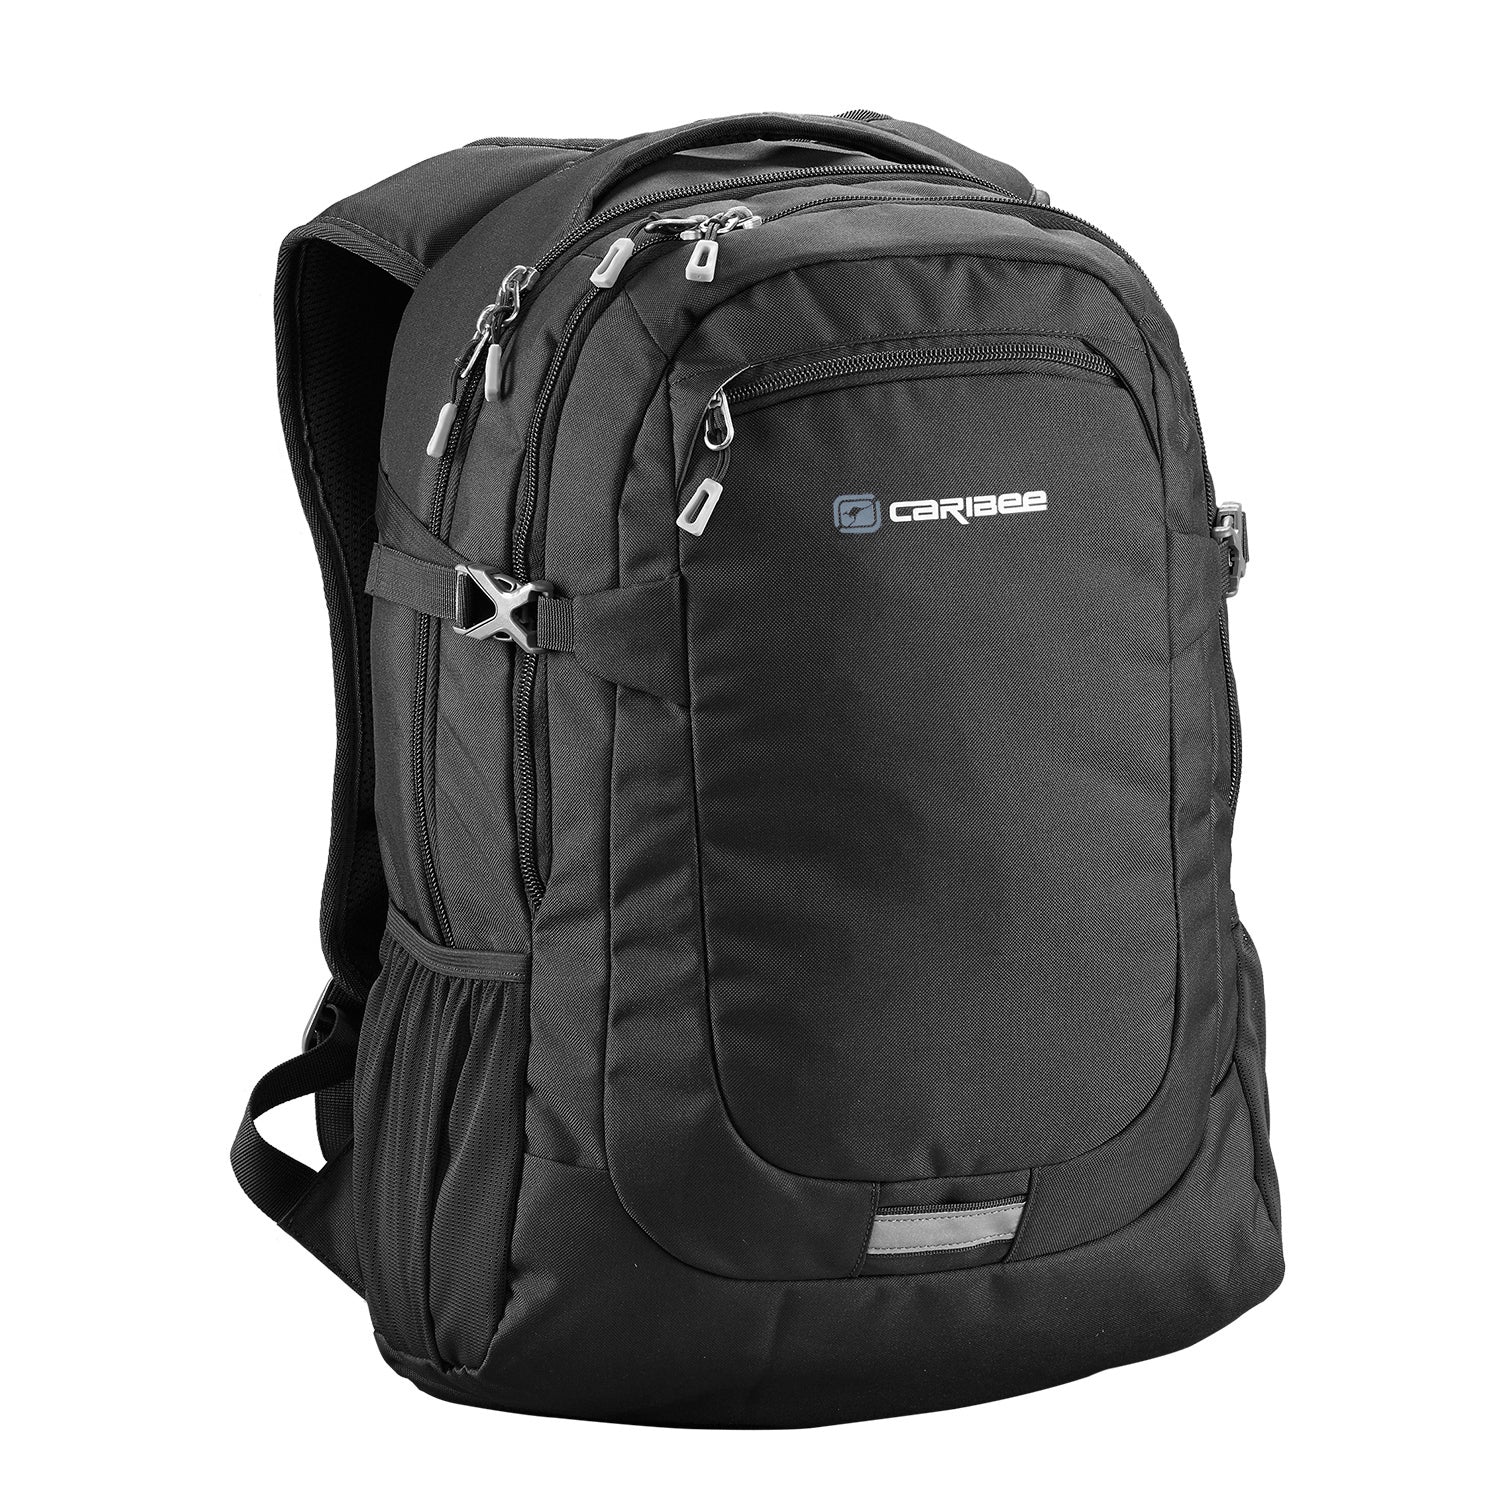 Caribee College 30L backpack in black